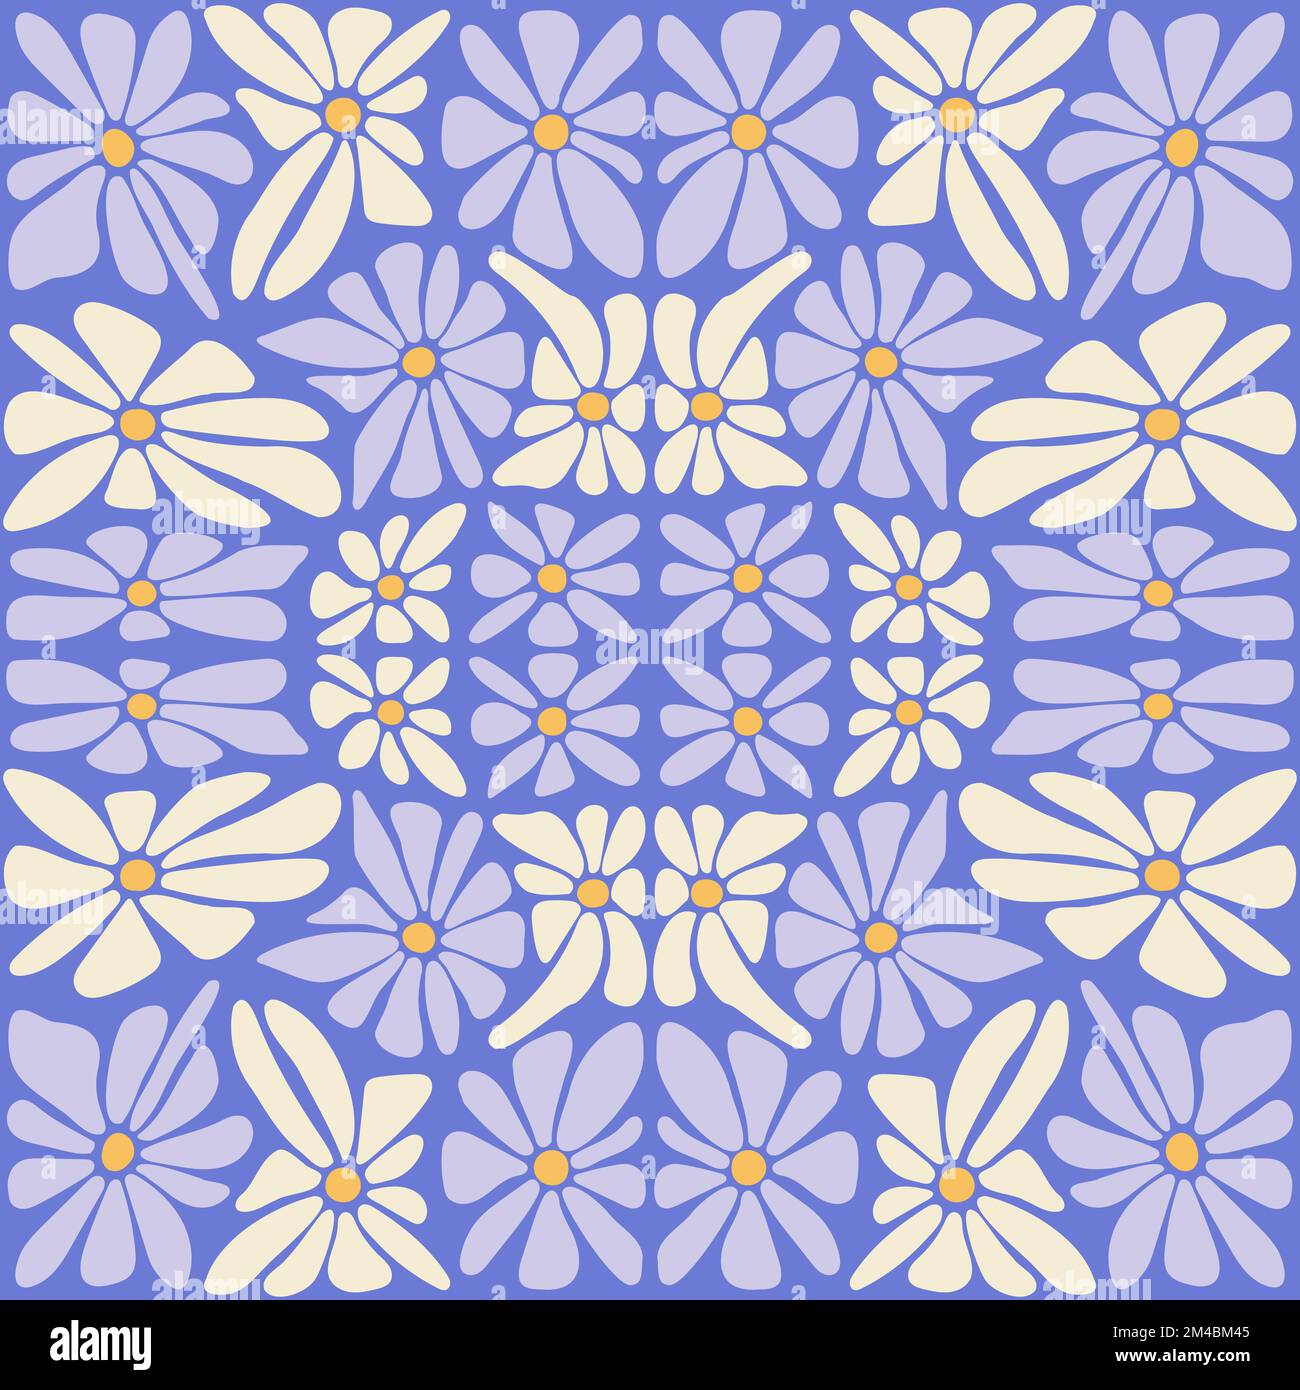 Daisy flower kaleidoscopic groovy retro seamless pattern. Y2k aesthetic ...